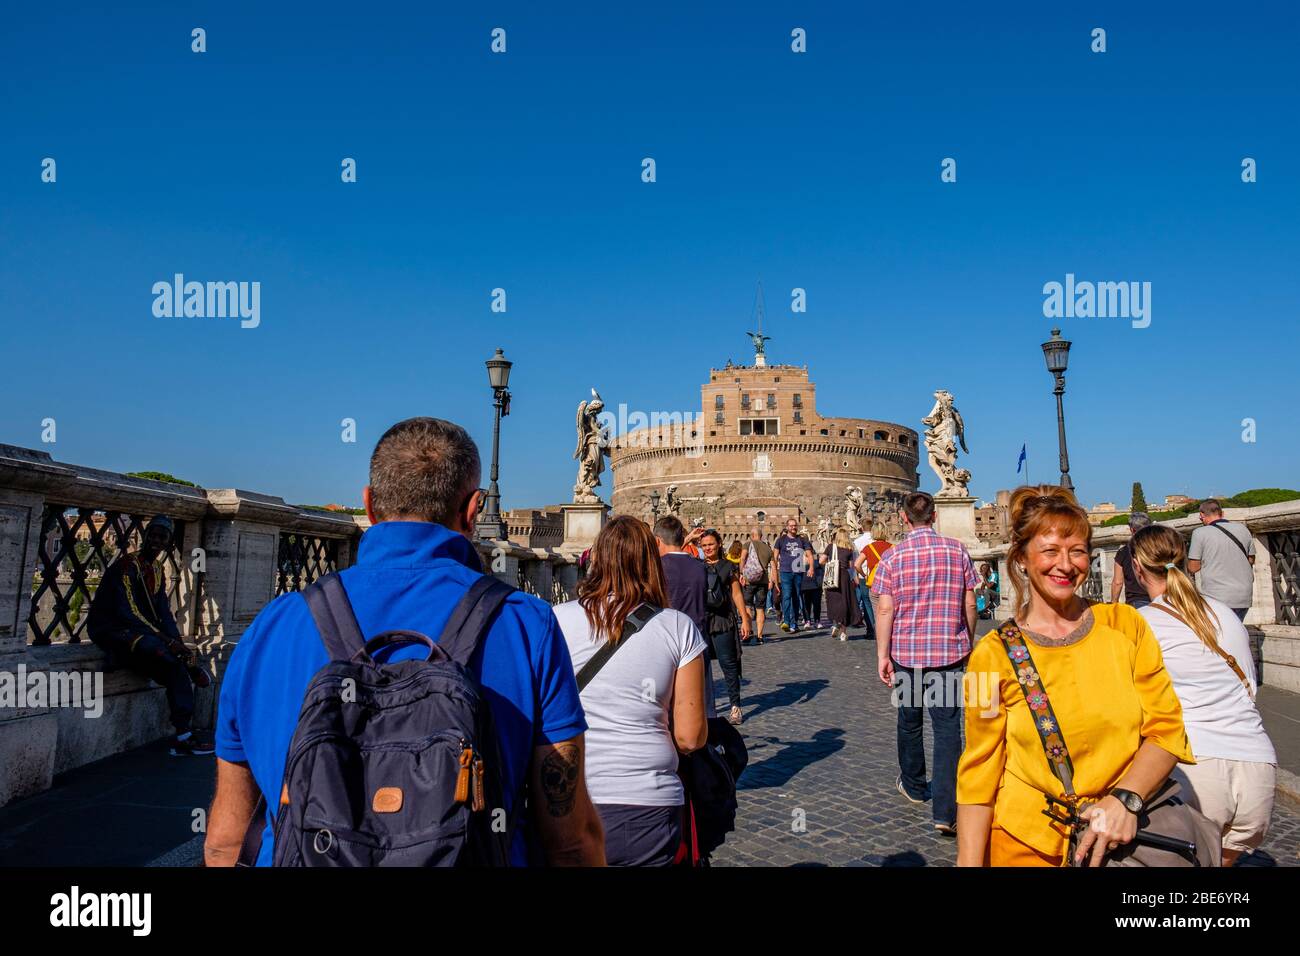 Mausoleum of Hadrian (Castel Sant'Angelo), tourists crossing Aelian Bridge (Ponte Sant'Angelo), Rome, Italy. Stock Photo